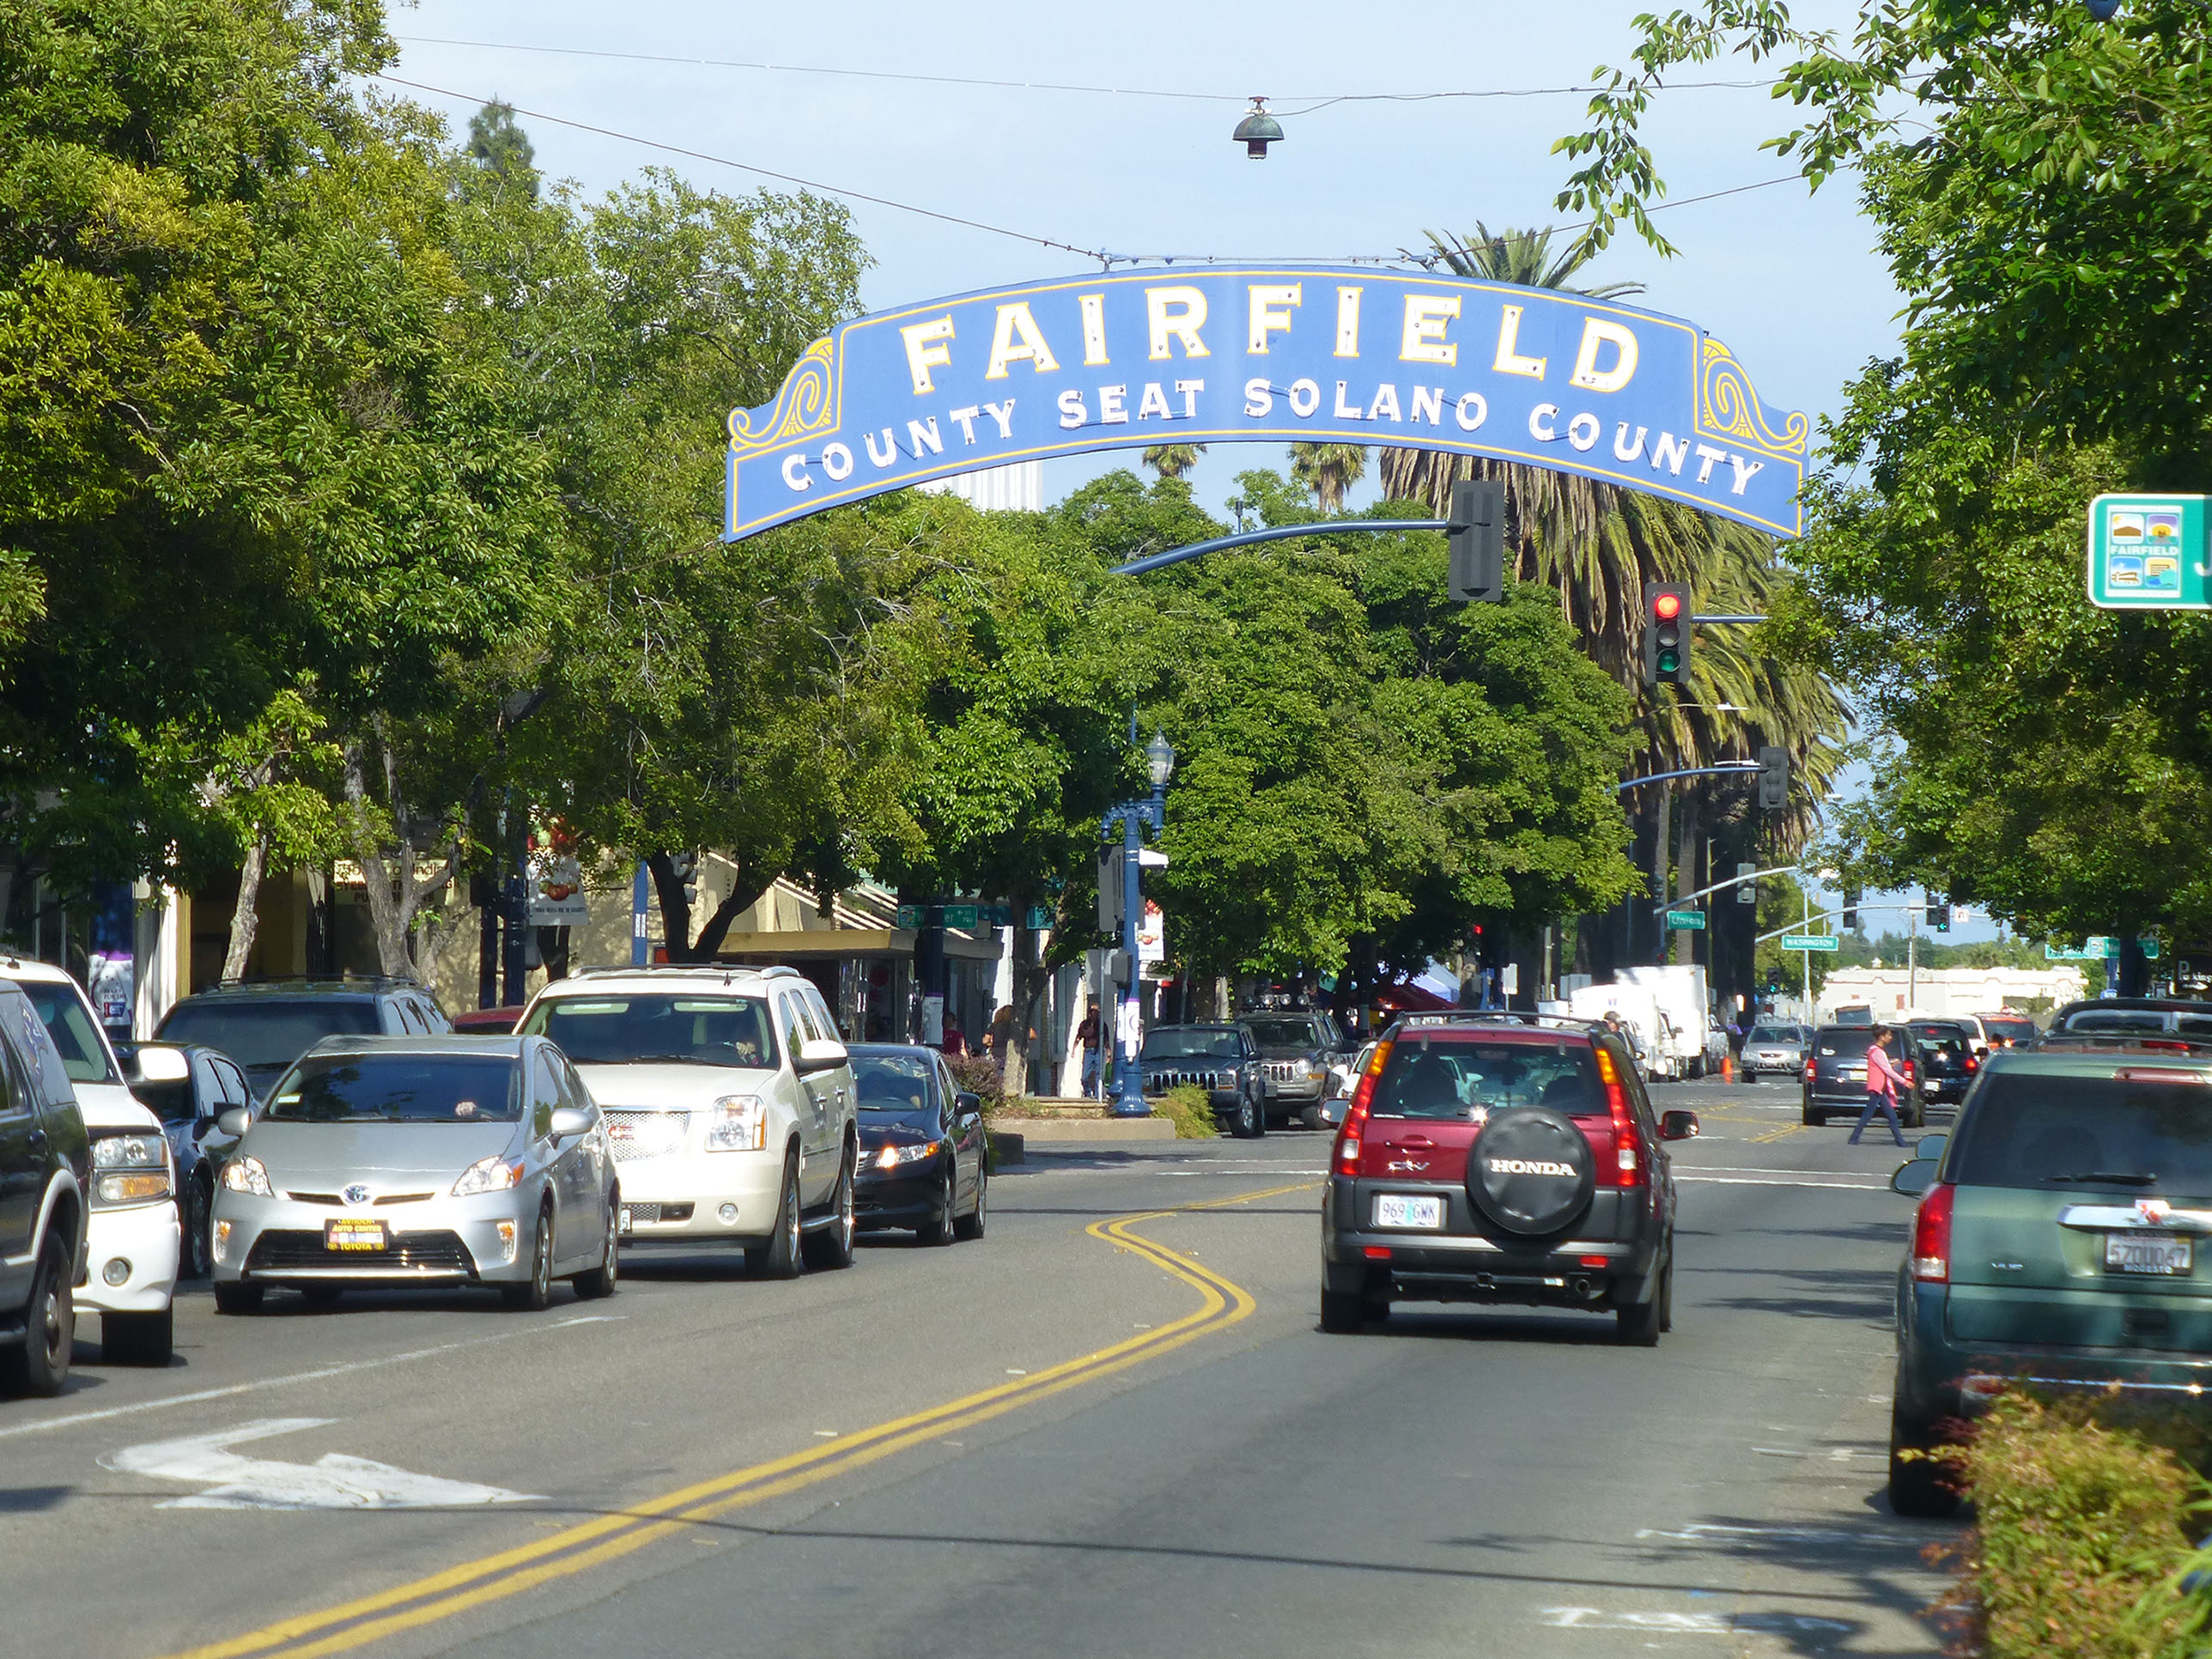 Fairfield Gateway on West Texas Street